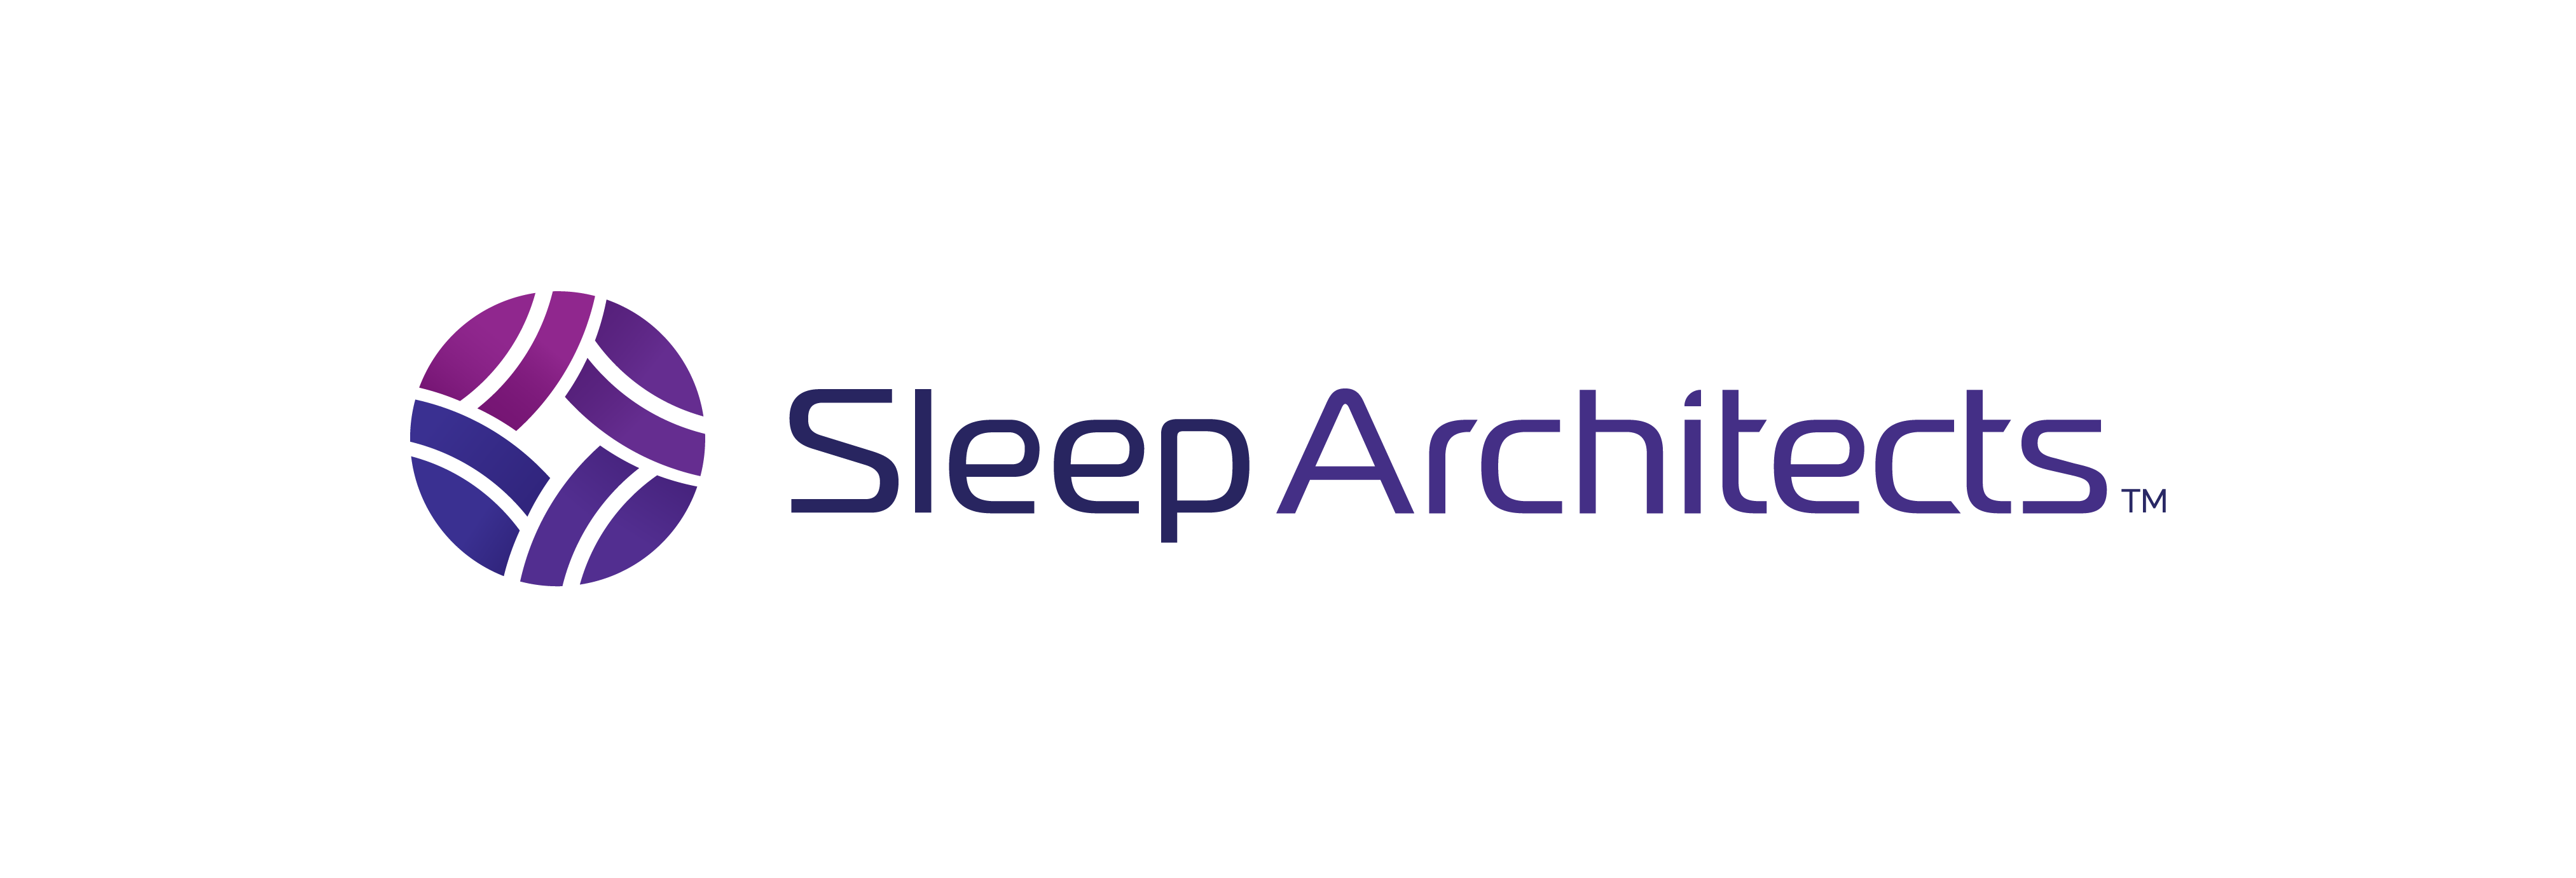 Sleep Architects